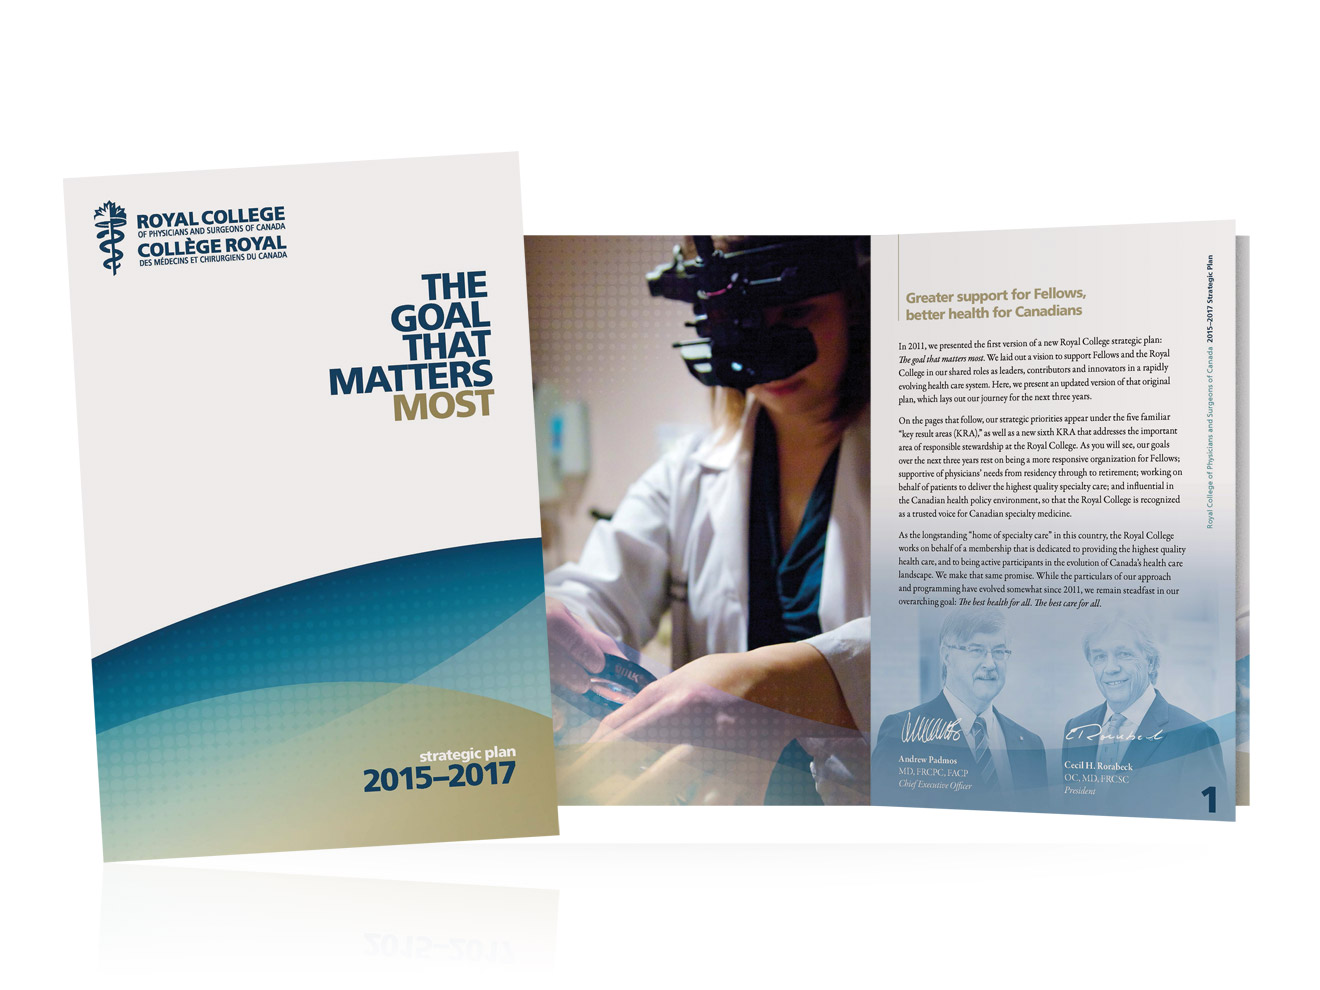 Royal College 2015-2017 Strategic Plan booklet